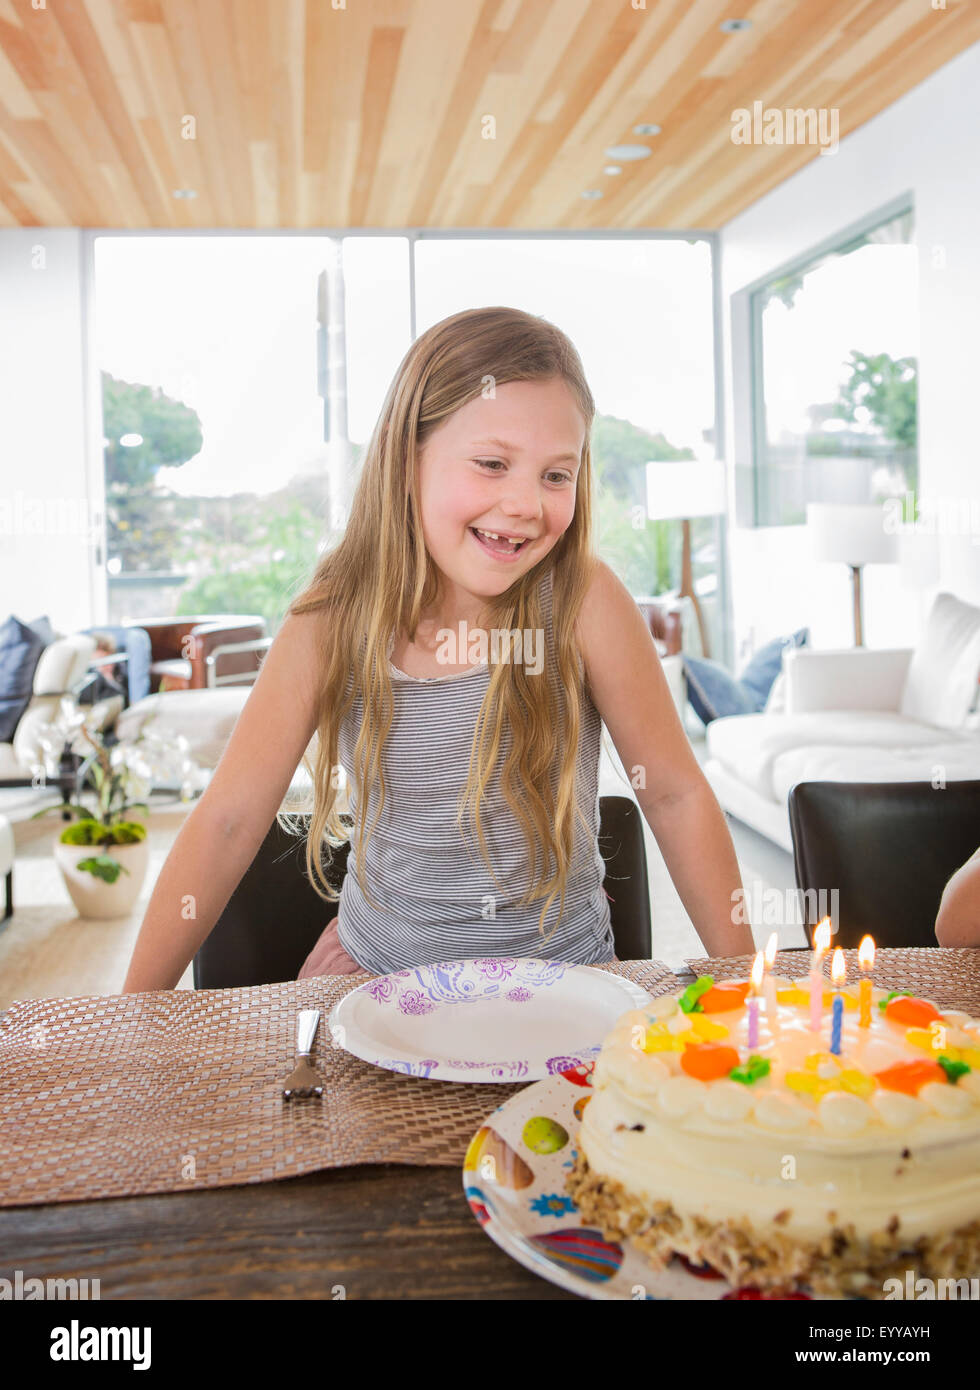 Caucasian girl admiring birthday cake at party Stock Photo